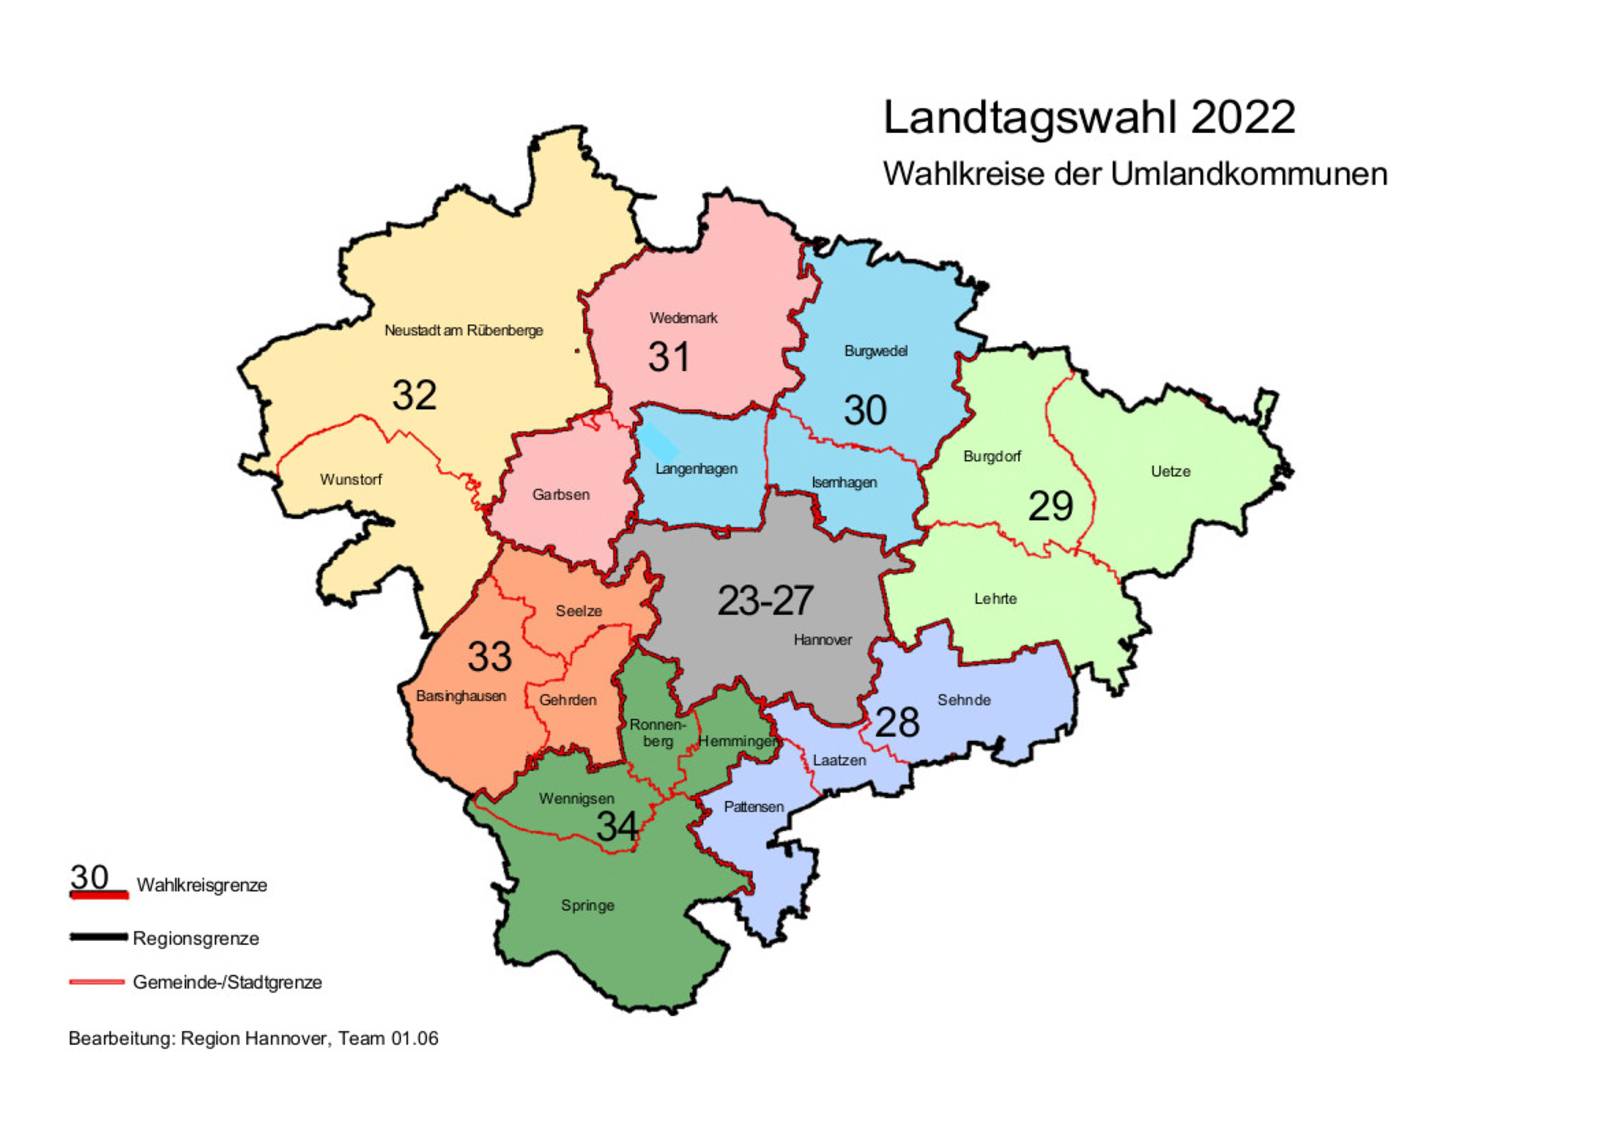 Wahlkreiskarte der Region Hannover